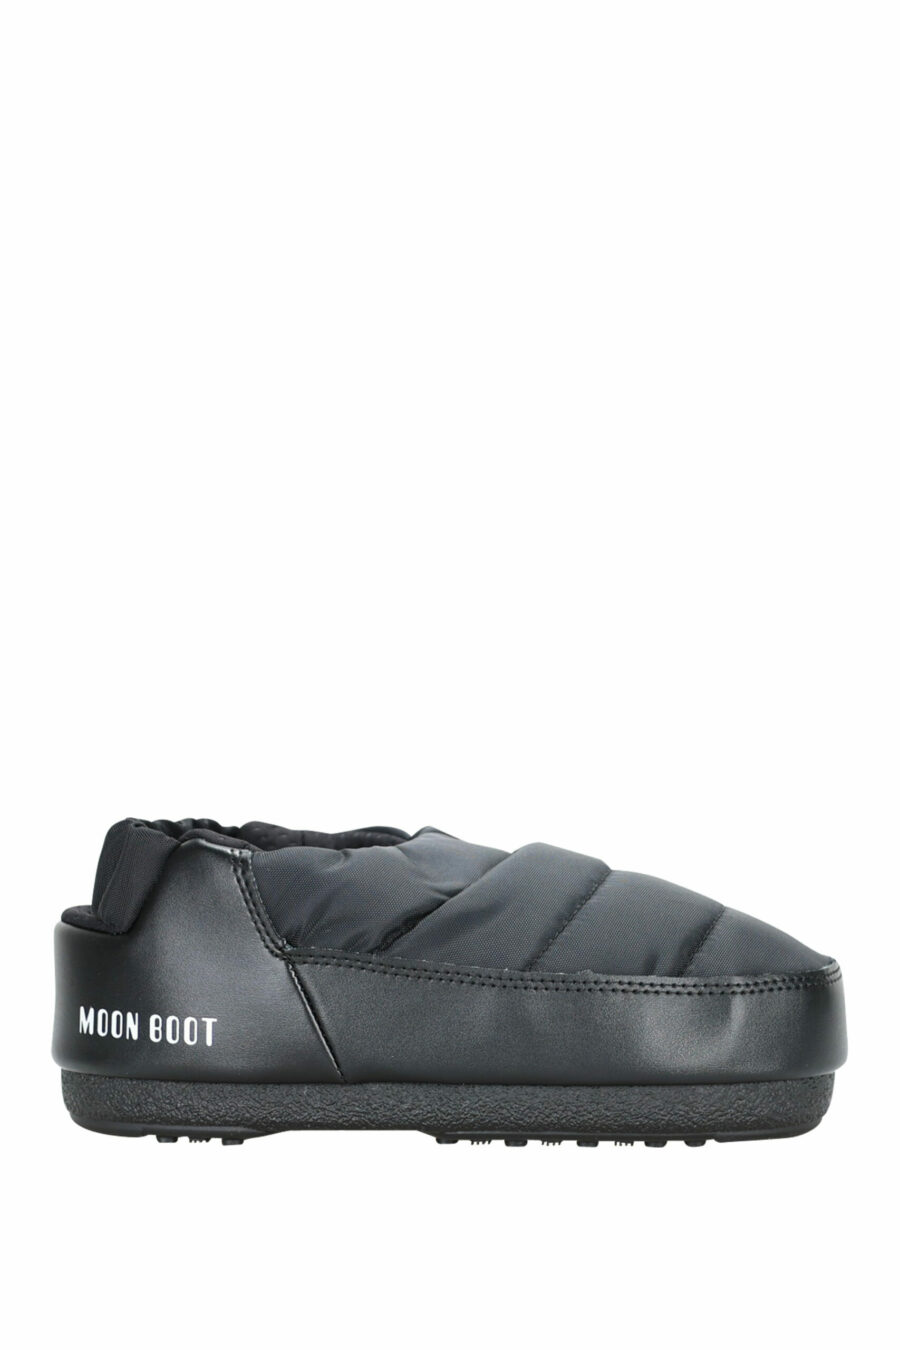 Black sandals with white mini-logo - 8050032004042 scaled